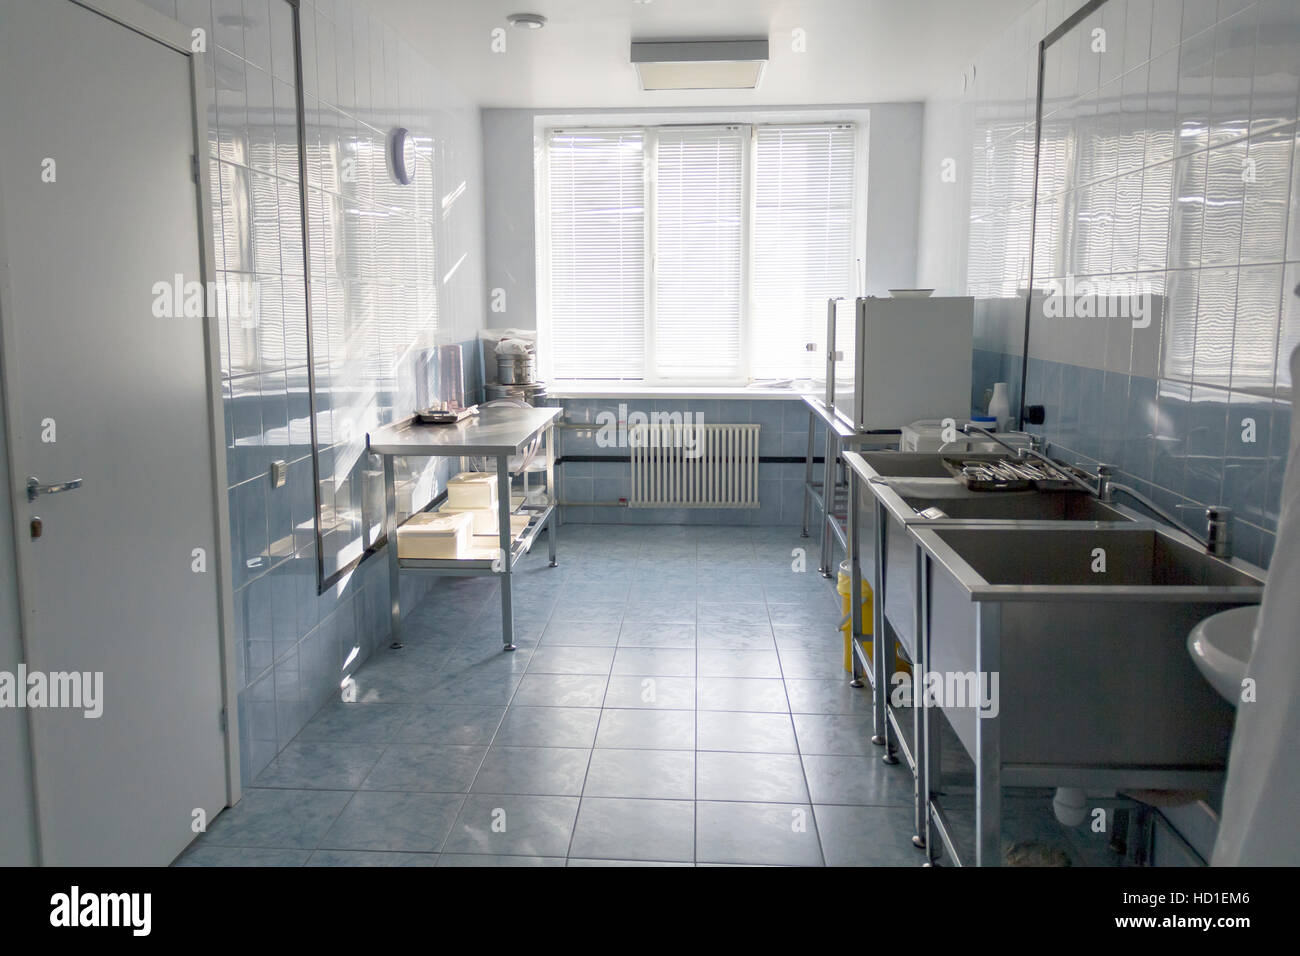 Photo of hospital kitchen with large sinks Stock Photo